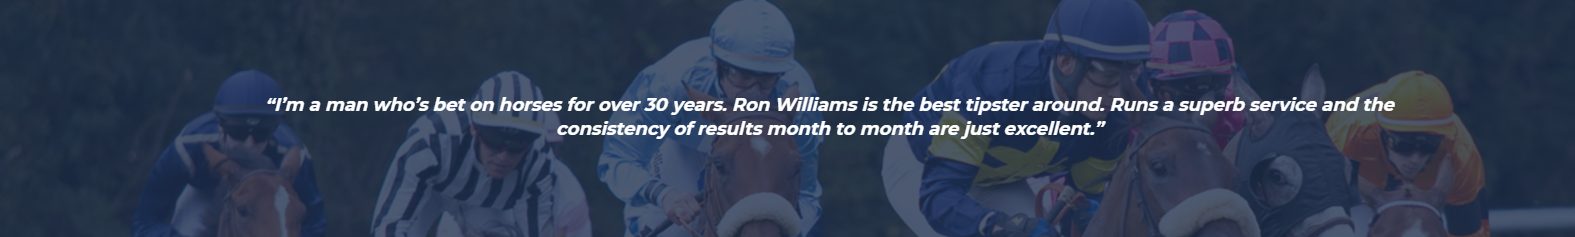 ron williams horse racing